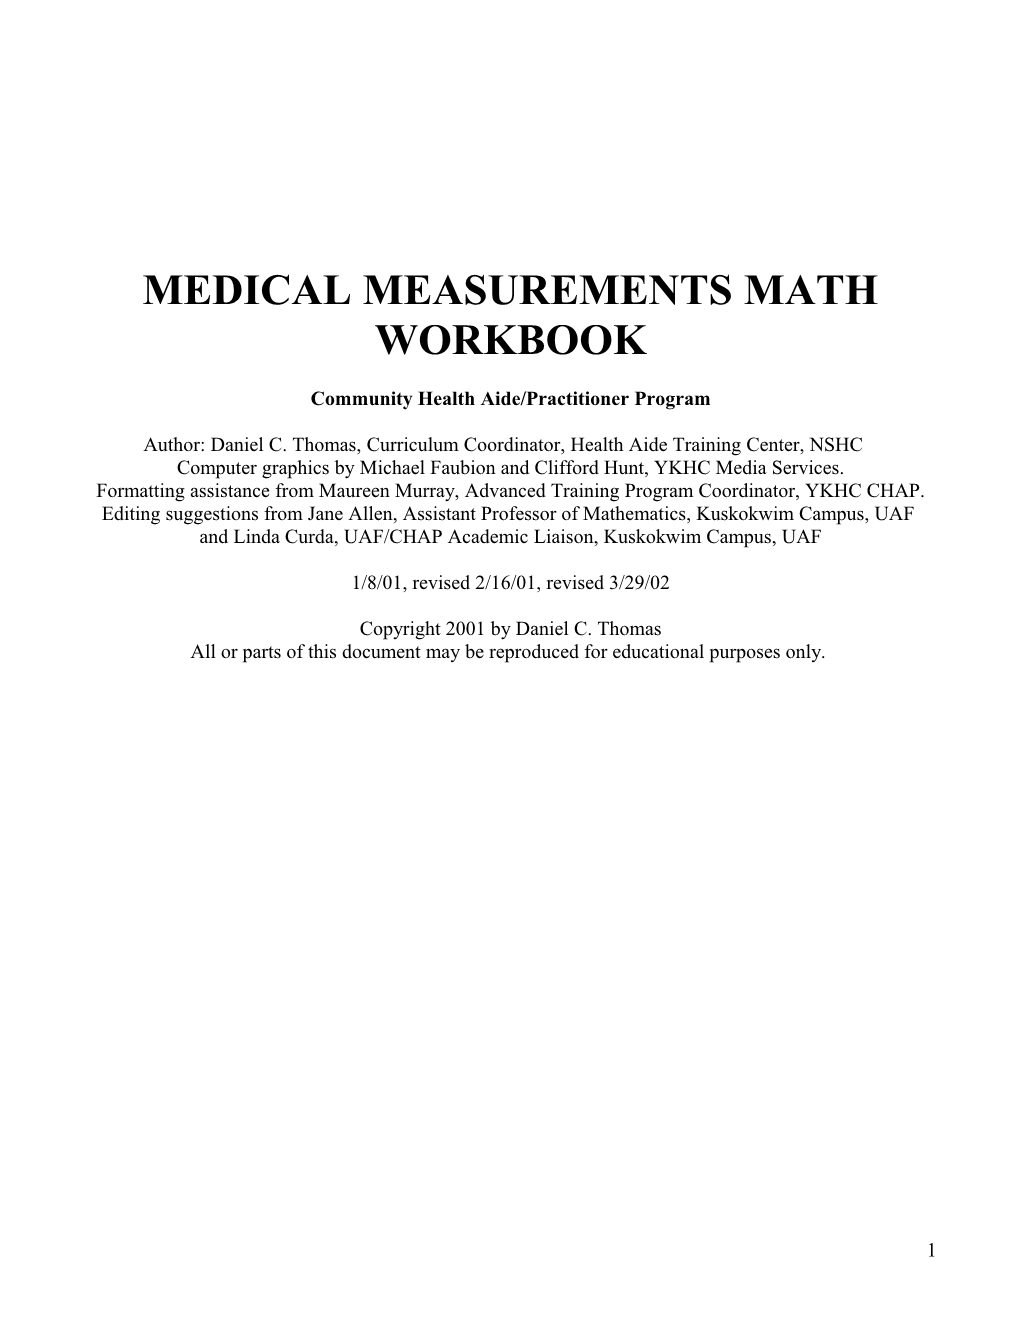 Medical Measurements Math Workbook